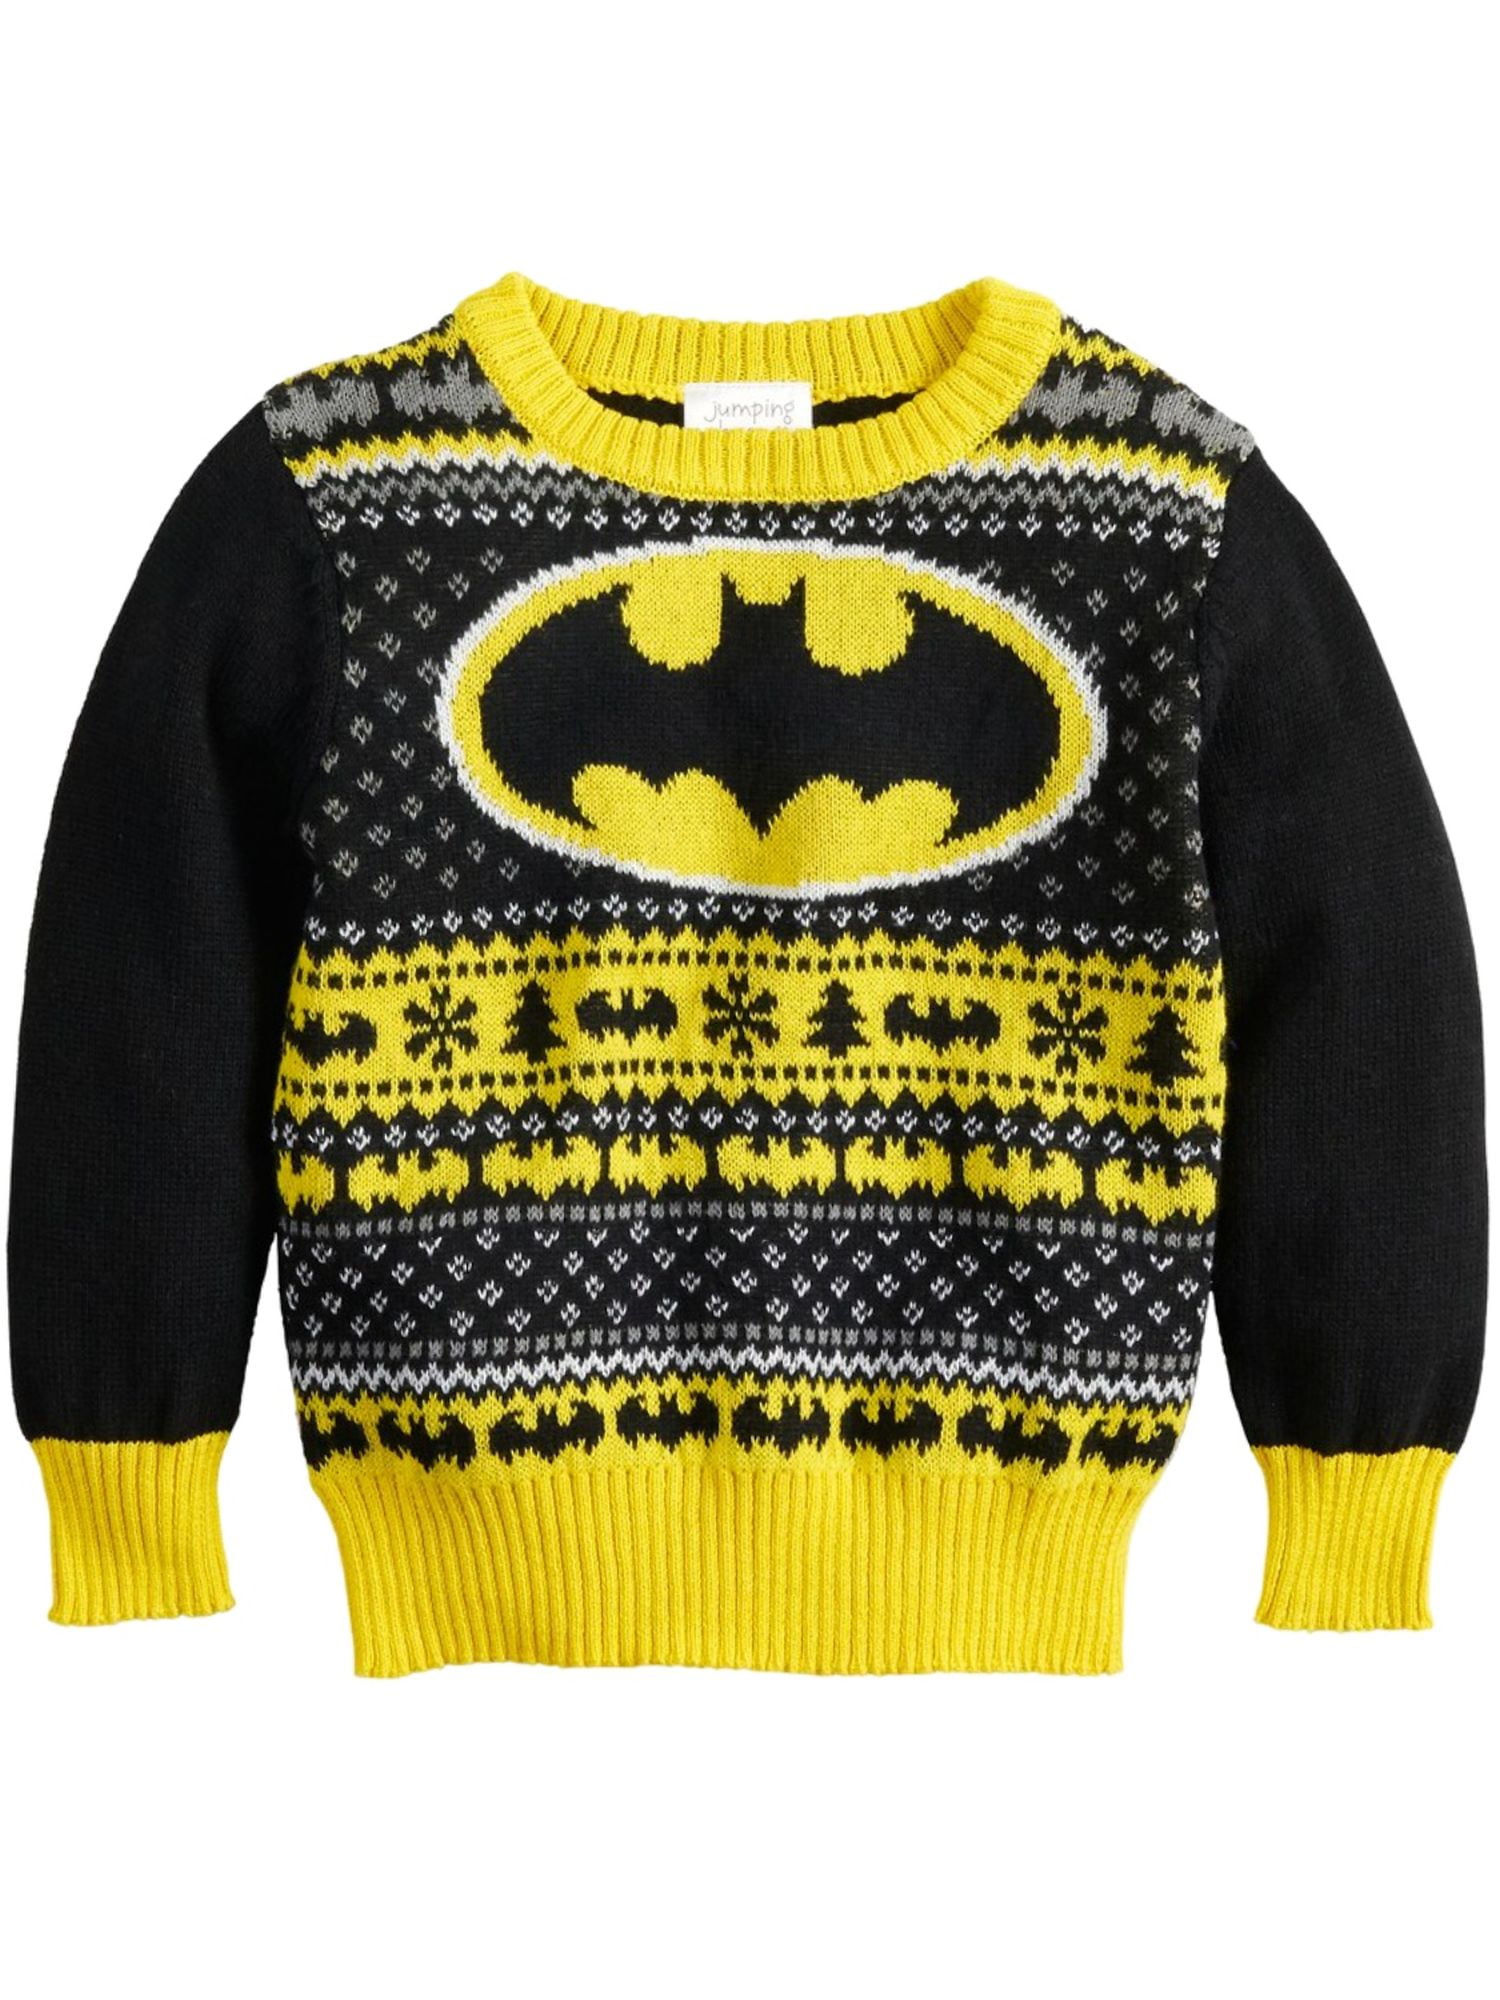 Batman DC Comics Toddler Boys Bat Symbol Christmas Holiday Knit Sweater 3T  